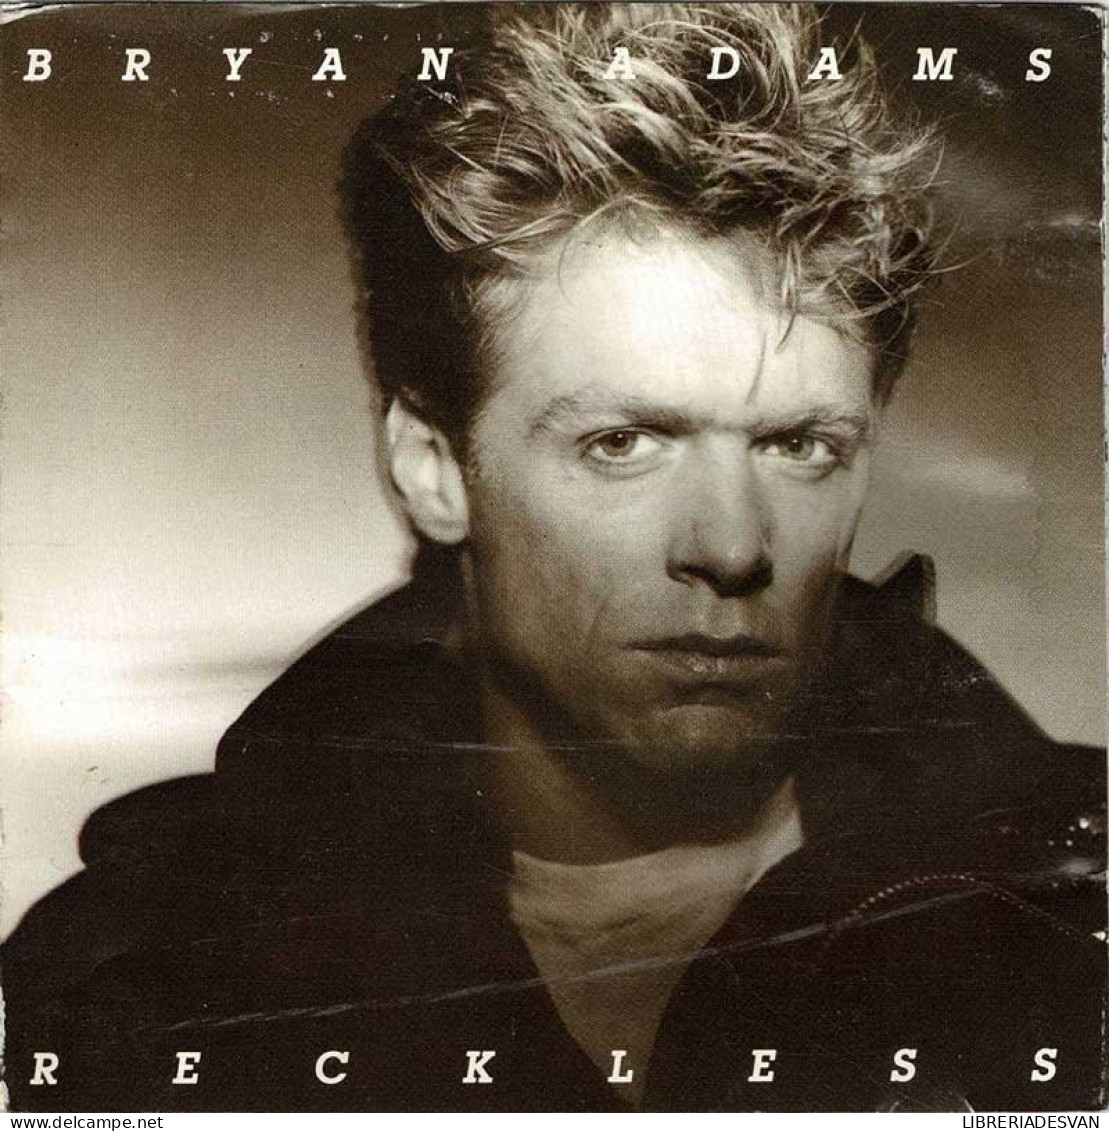 Bryan Adams - Reckless. CD - Country Et Folk